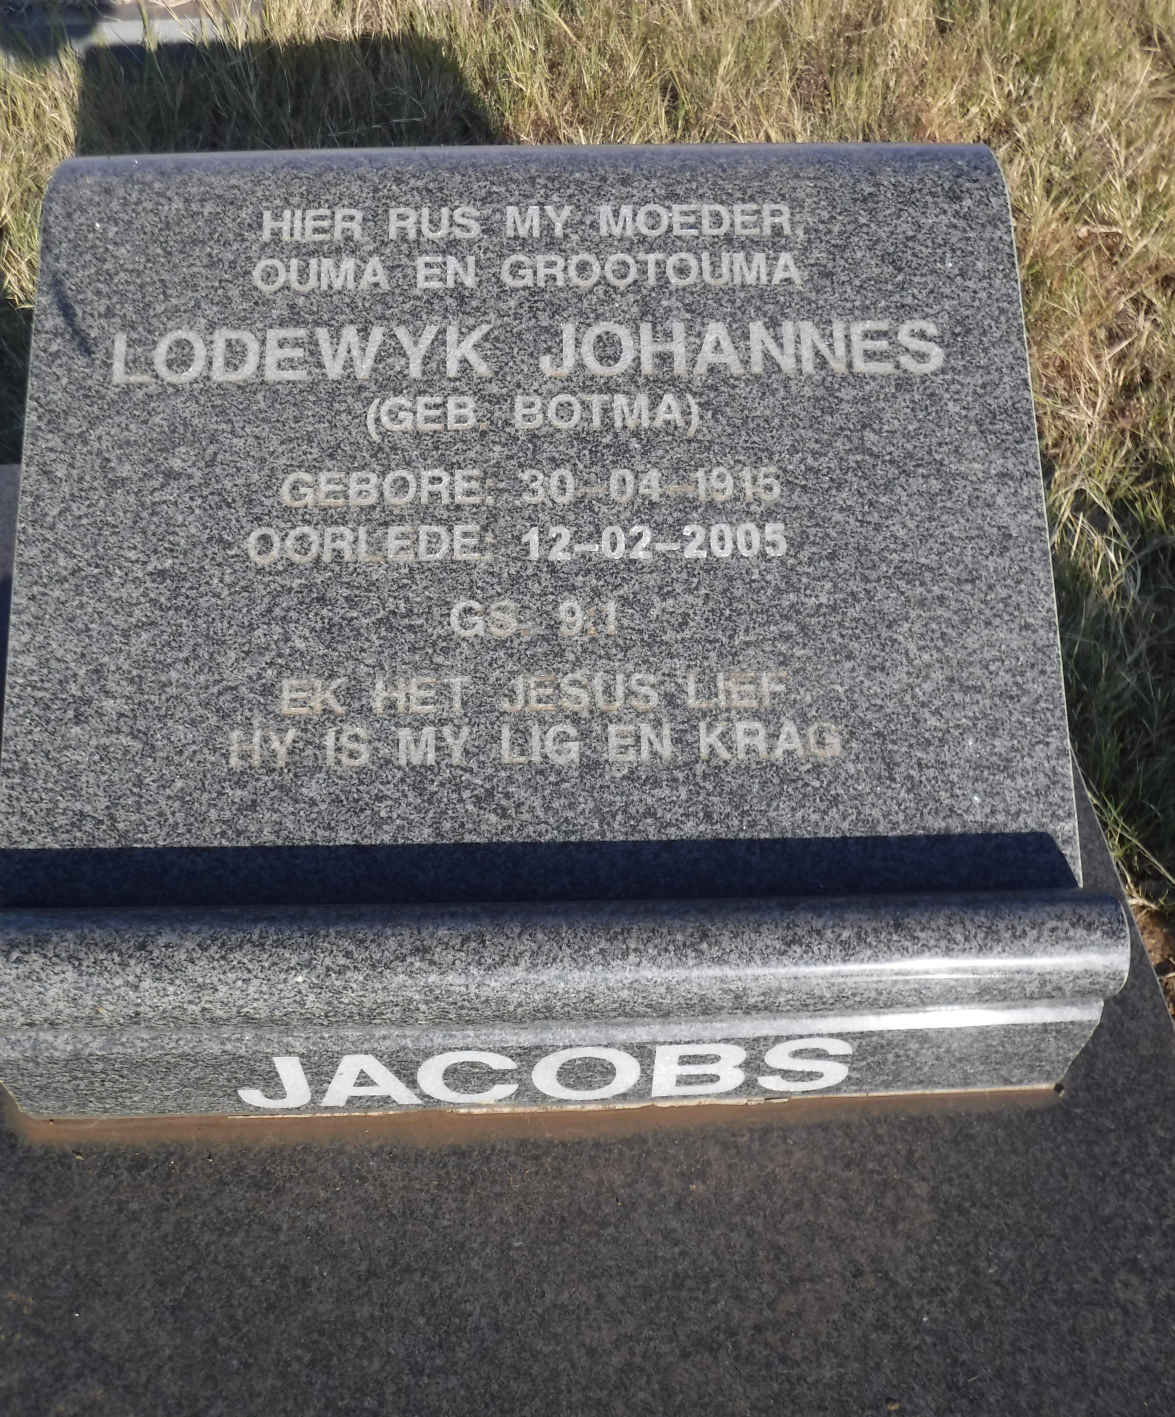 JACOBS Lodewyk Johannes nee BOTMA 1915-2005